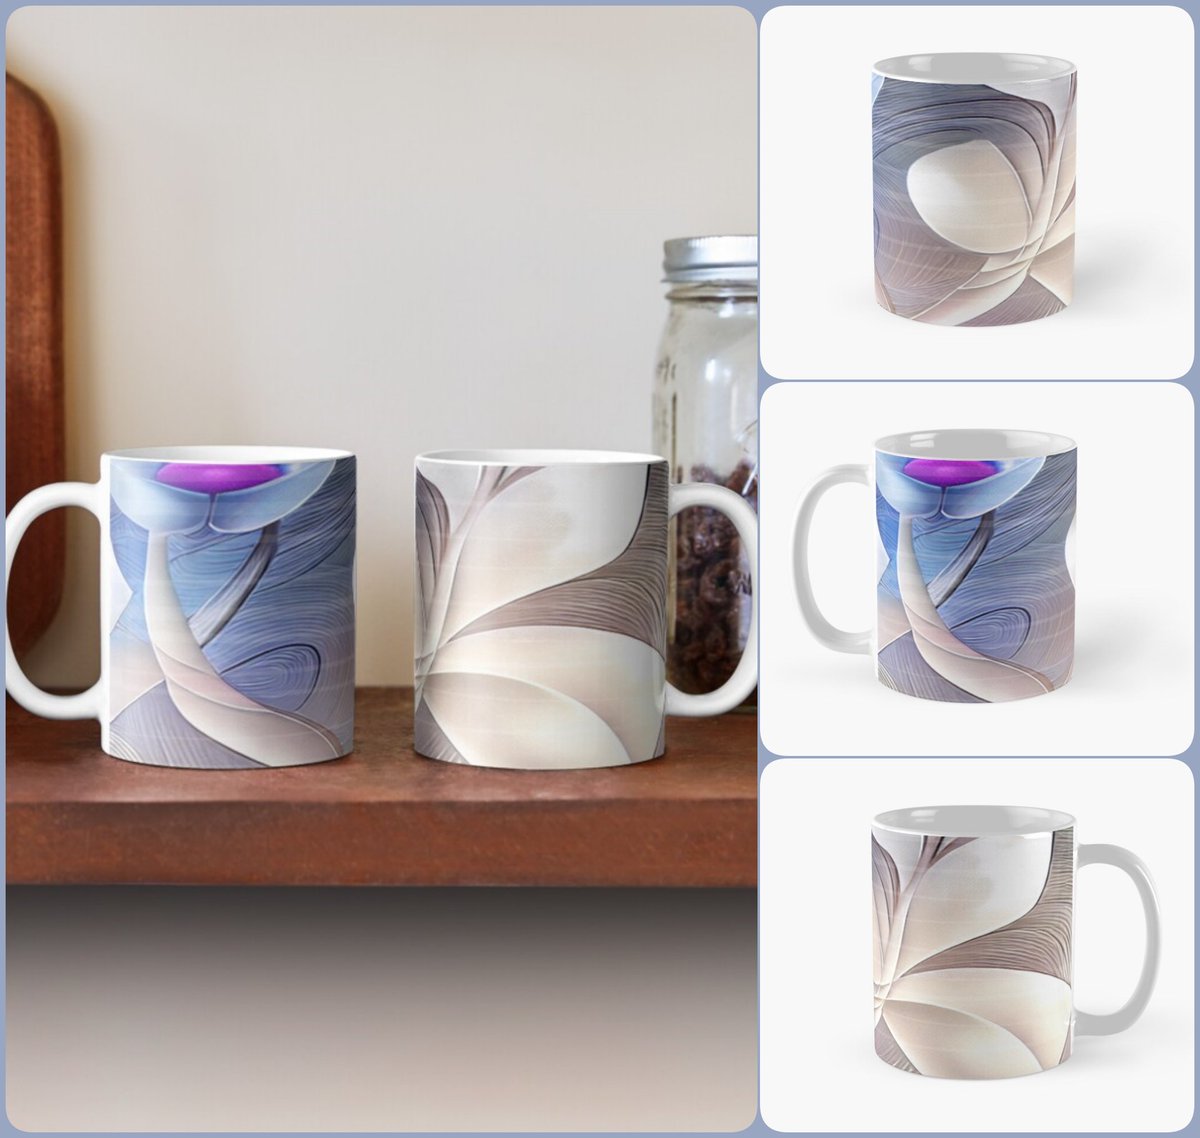 Modern Blossom Coffee Mug~by Art Falaxy
~Be Artful~ #accents #homedecor #art #artfalaxy #coasters #mugs #puzzles #acrylicblocks #aprons #redbubble #trendy #modern #gifts #FindYourThing #blue #white #purple

redbubble.com/i/mug/Modern-B…